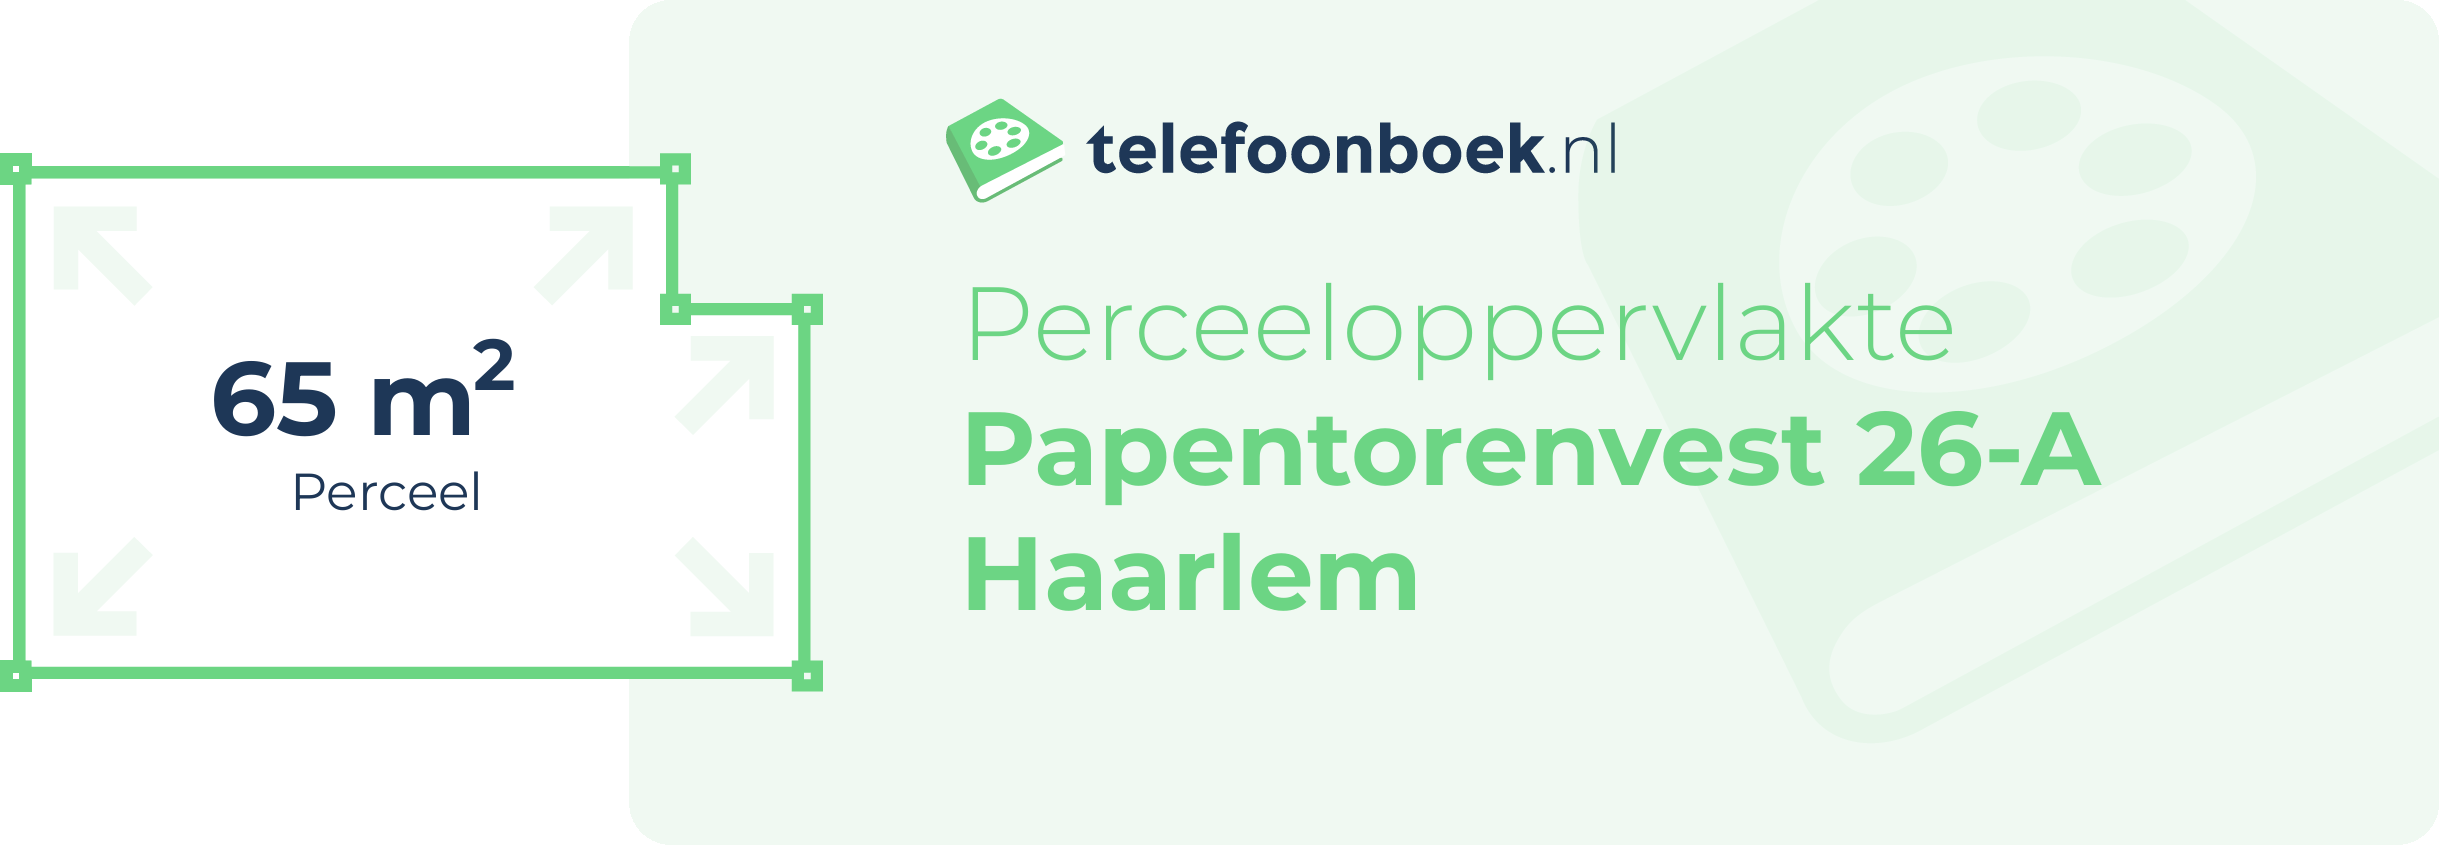 Perceeloppervlakte Papentorenvest 26-A Haarlem